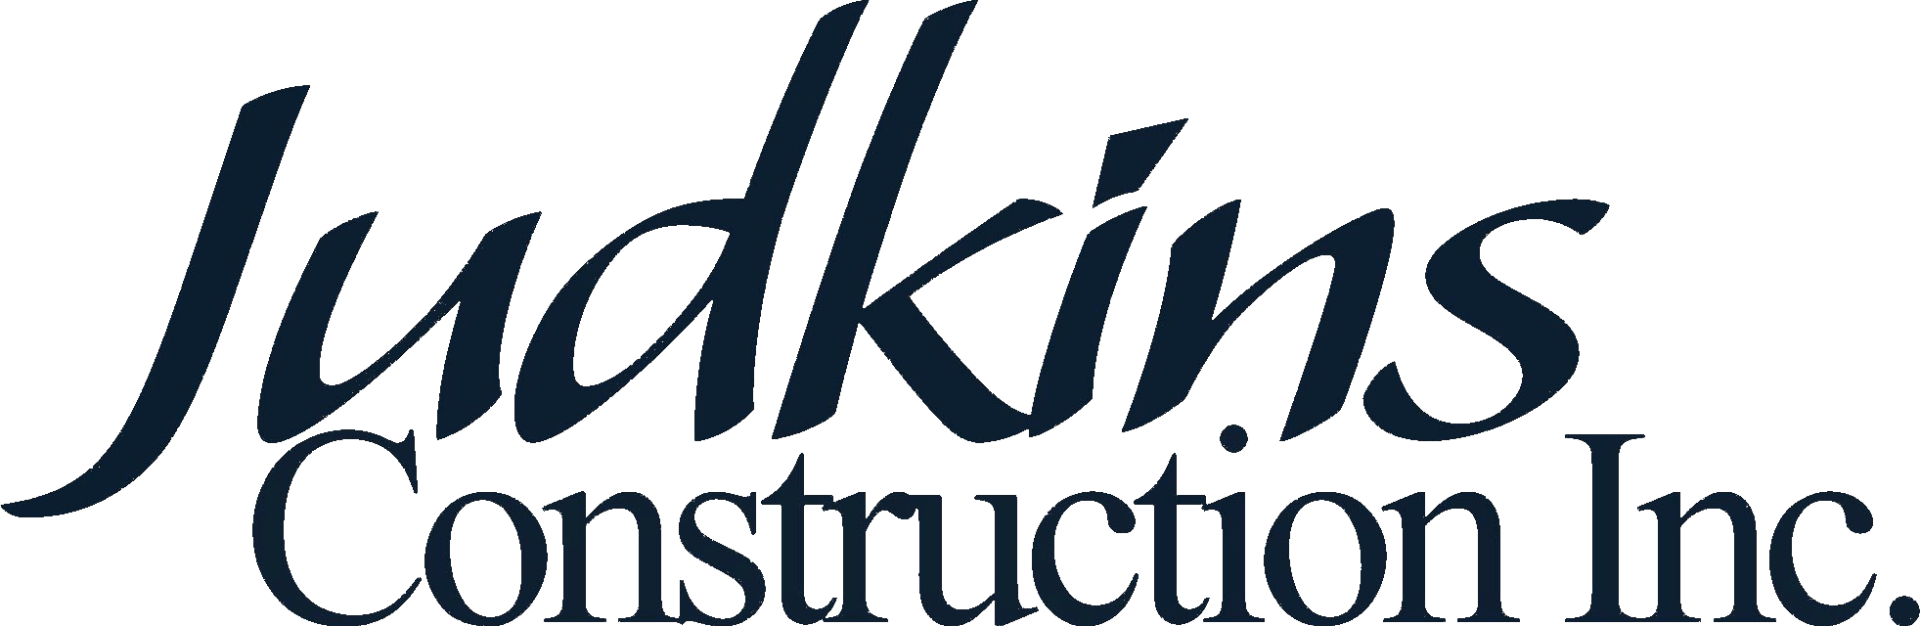 Judkins Construction Inc logo